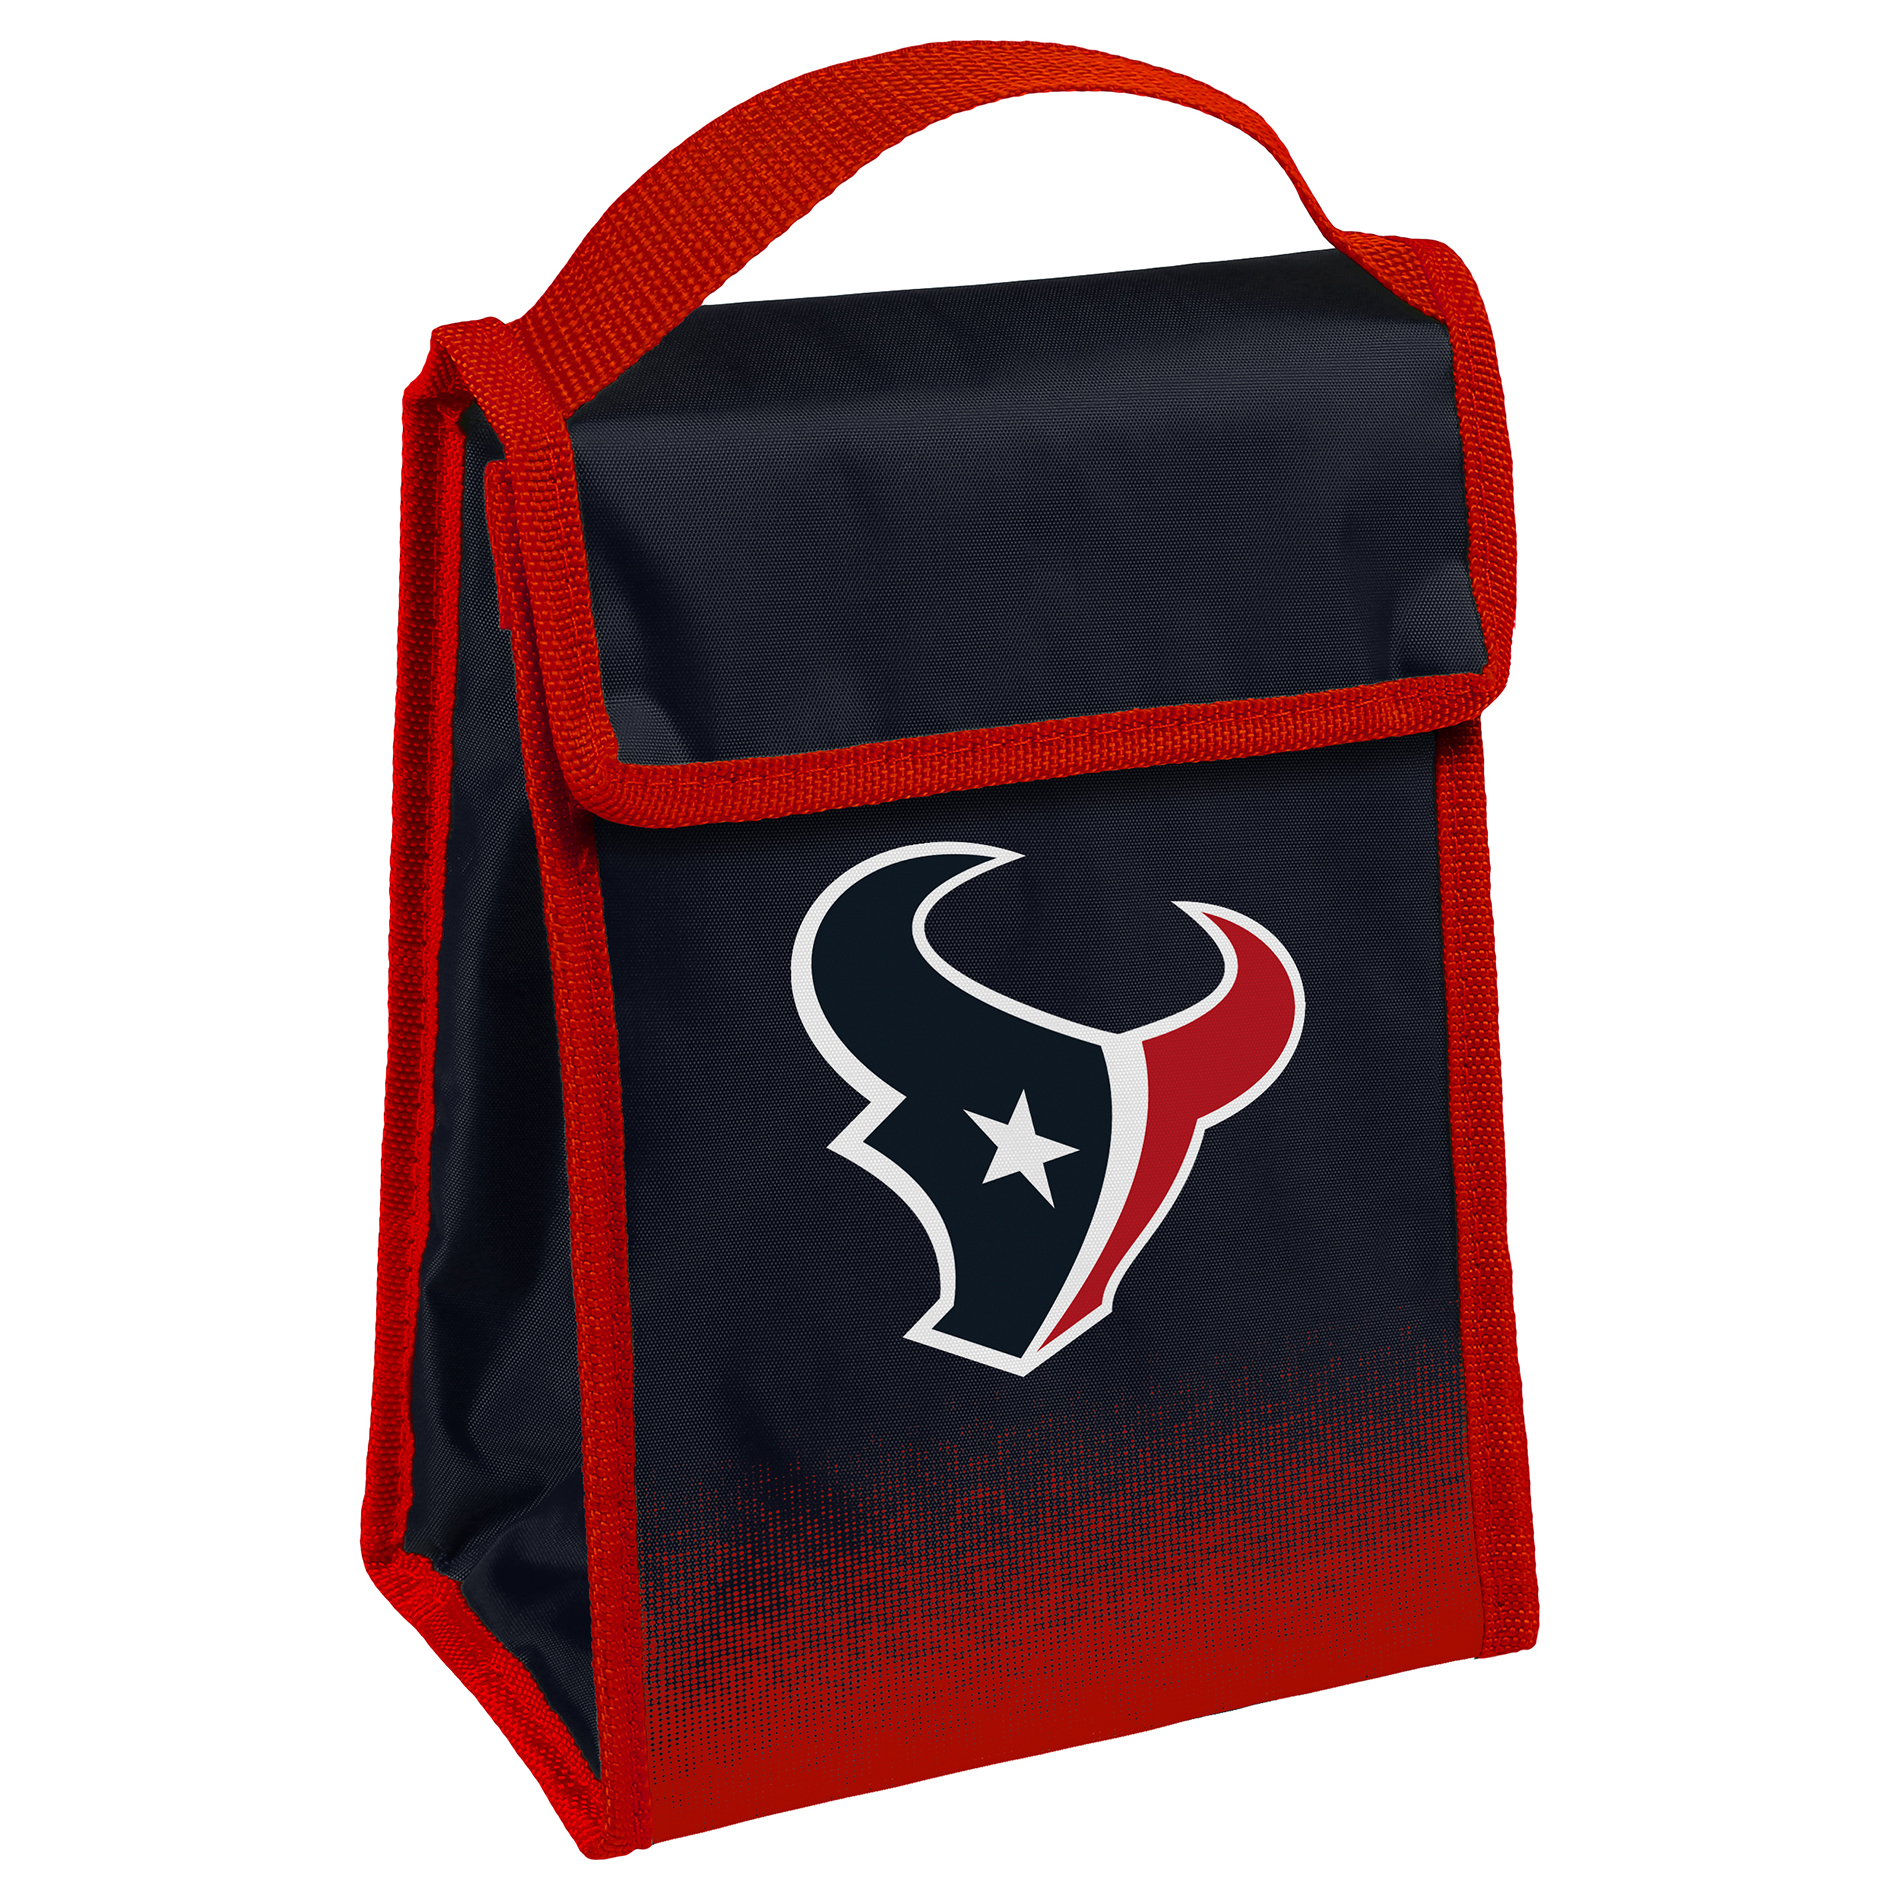 NFL Gradient Lunch Bag - Houston Texans